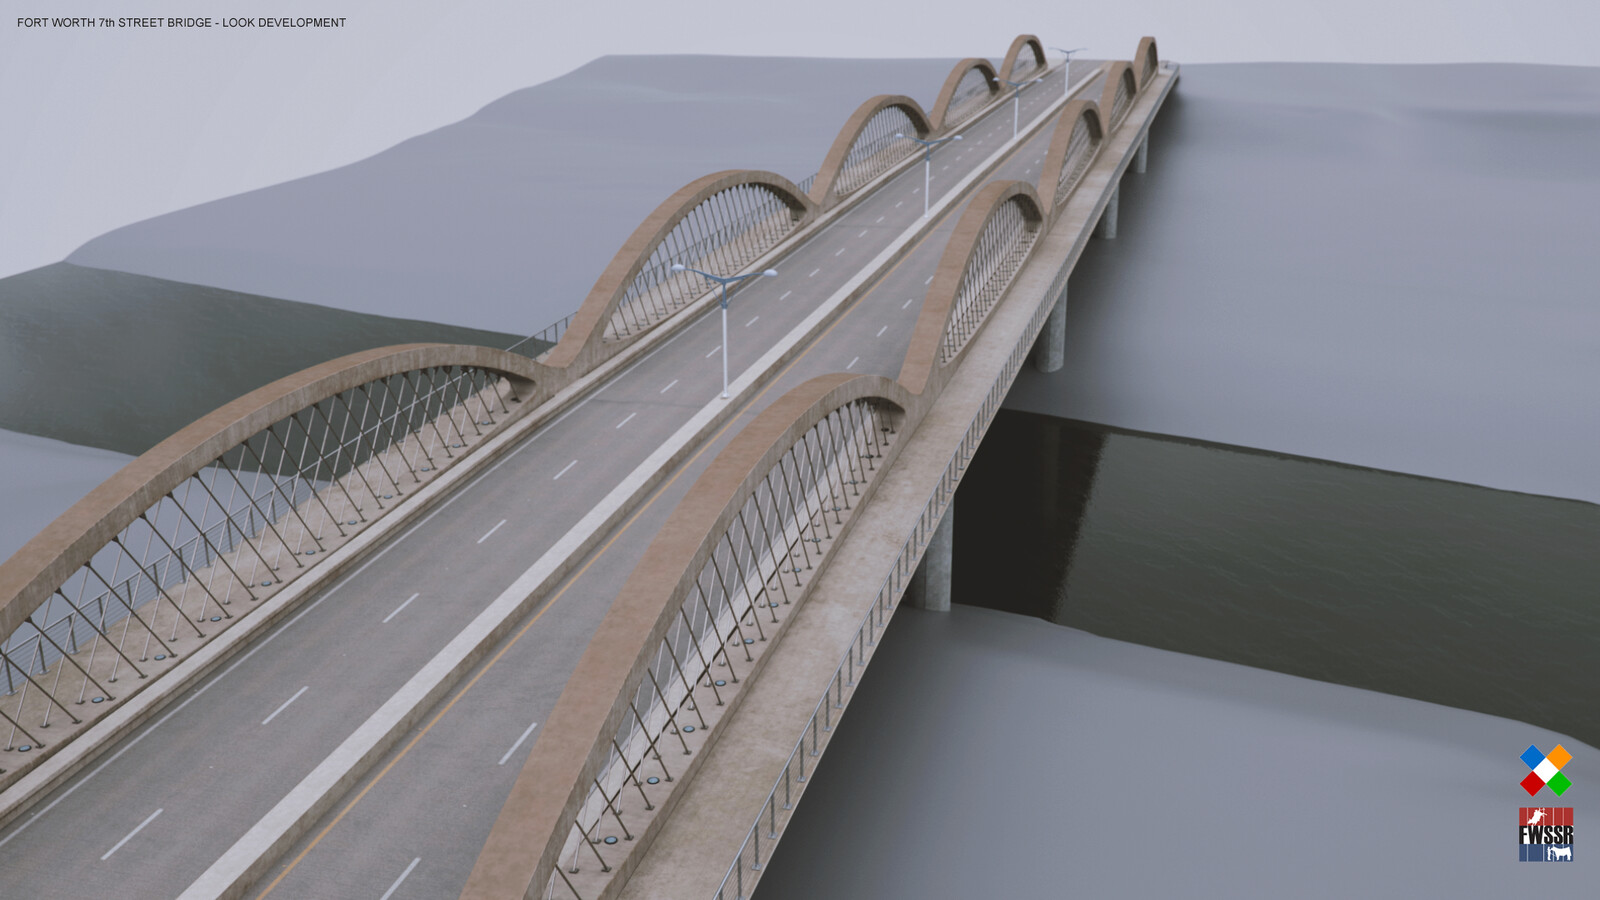 Look Development done for Fort Worth 7th Street Bridge model